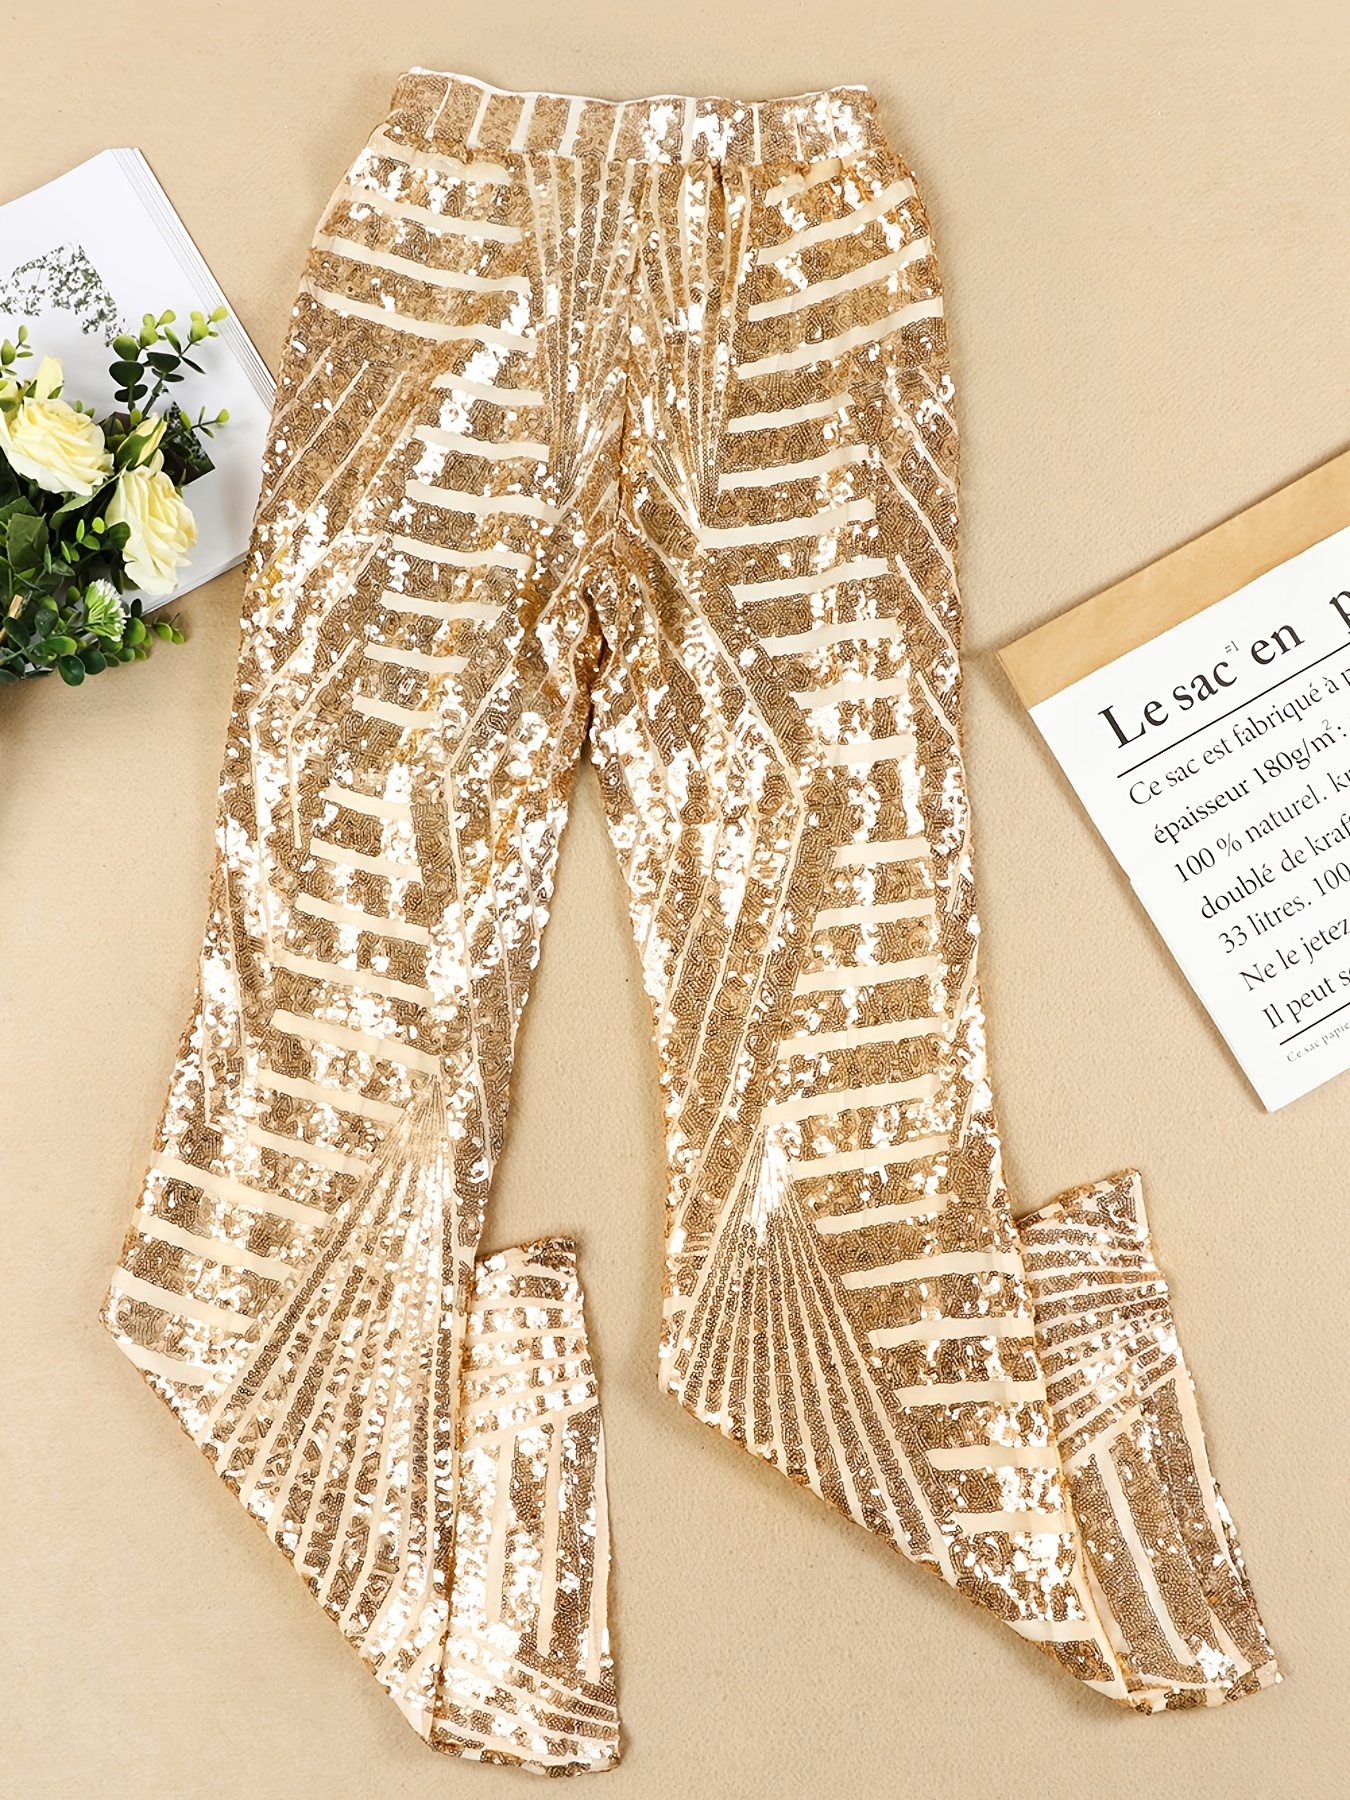 CBGELRT Shiny Glitter Sequin Leggings Fashion Women's Pants Solid